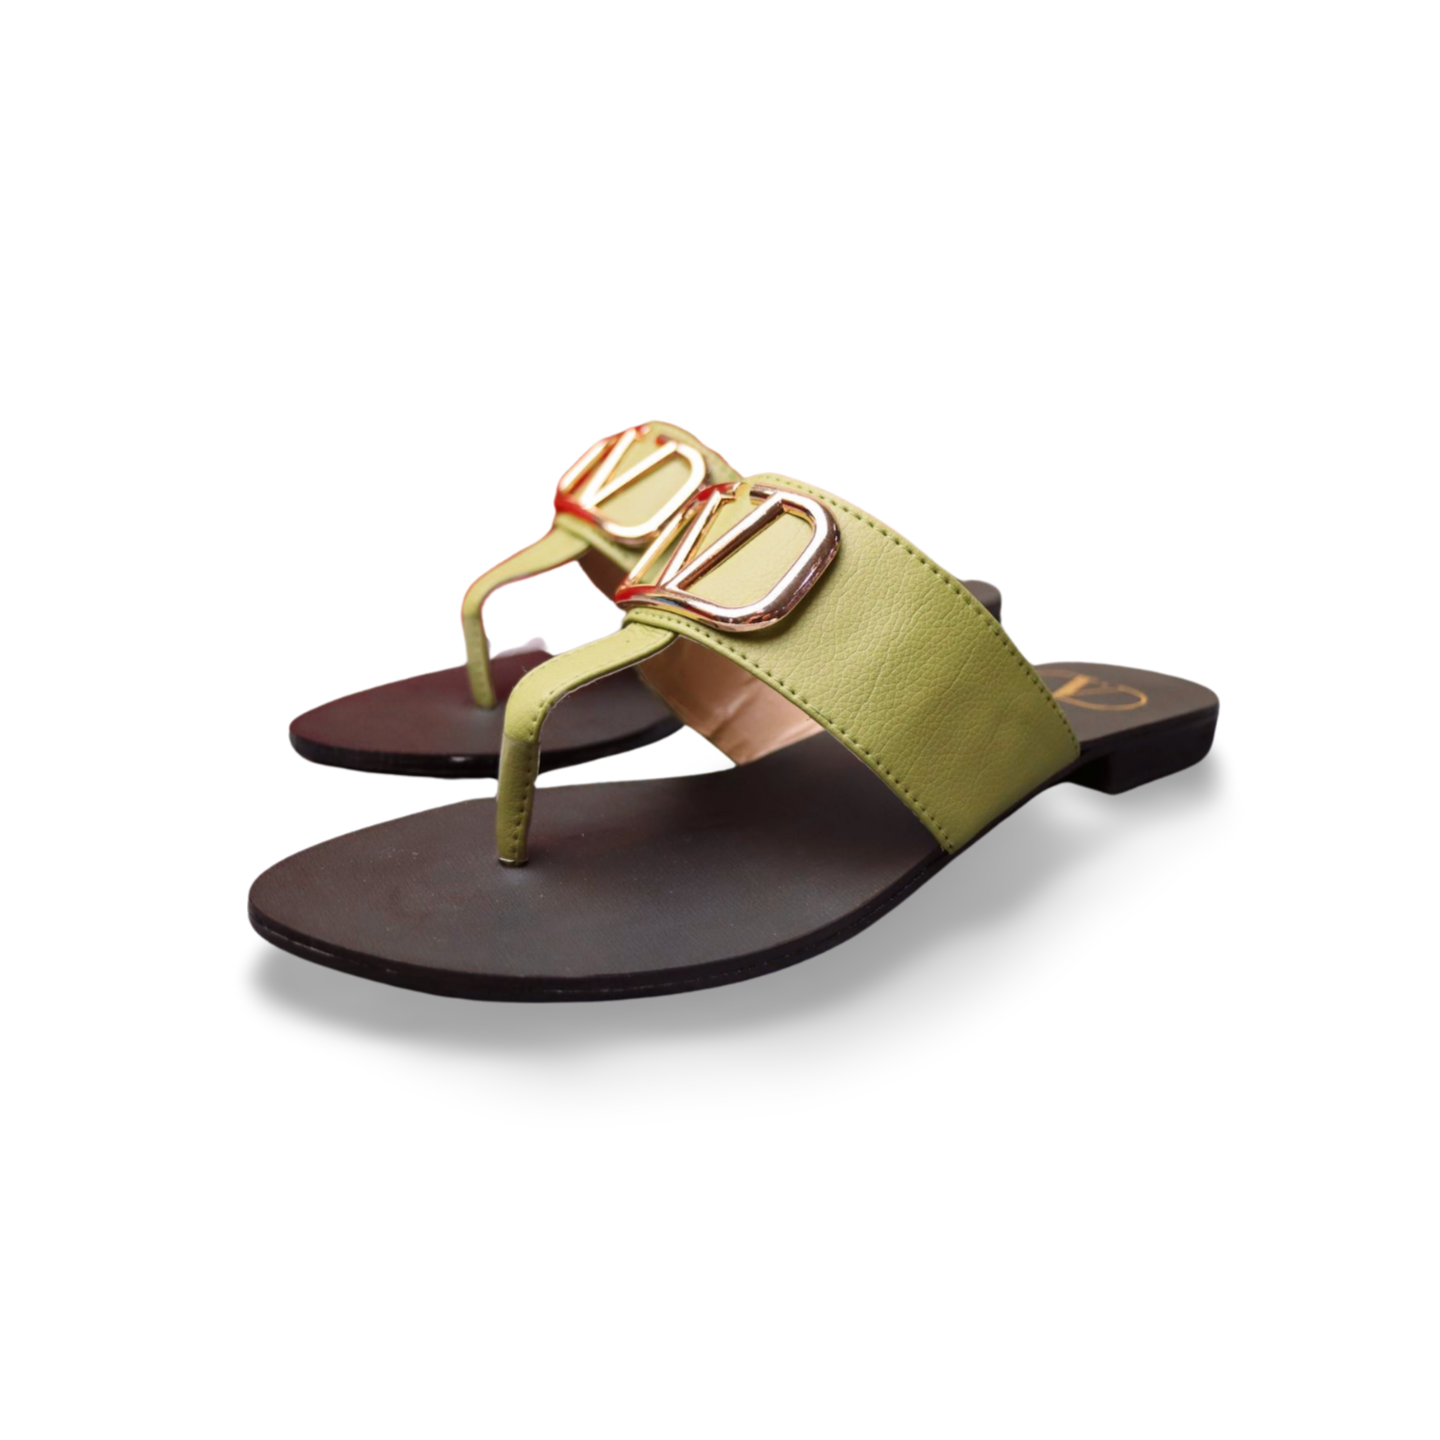 Women’s Flip-Flops Flat Sandals